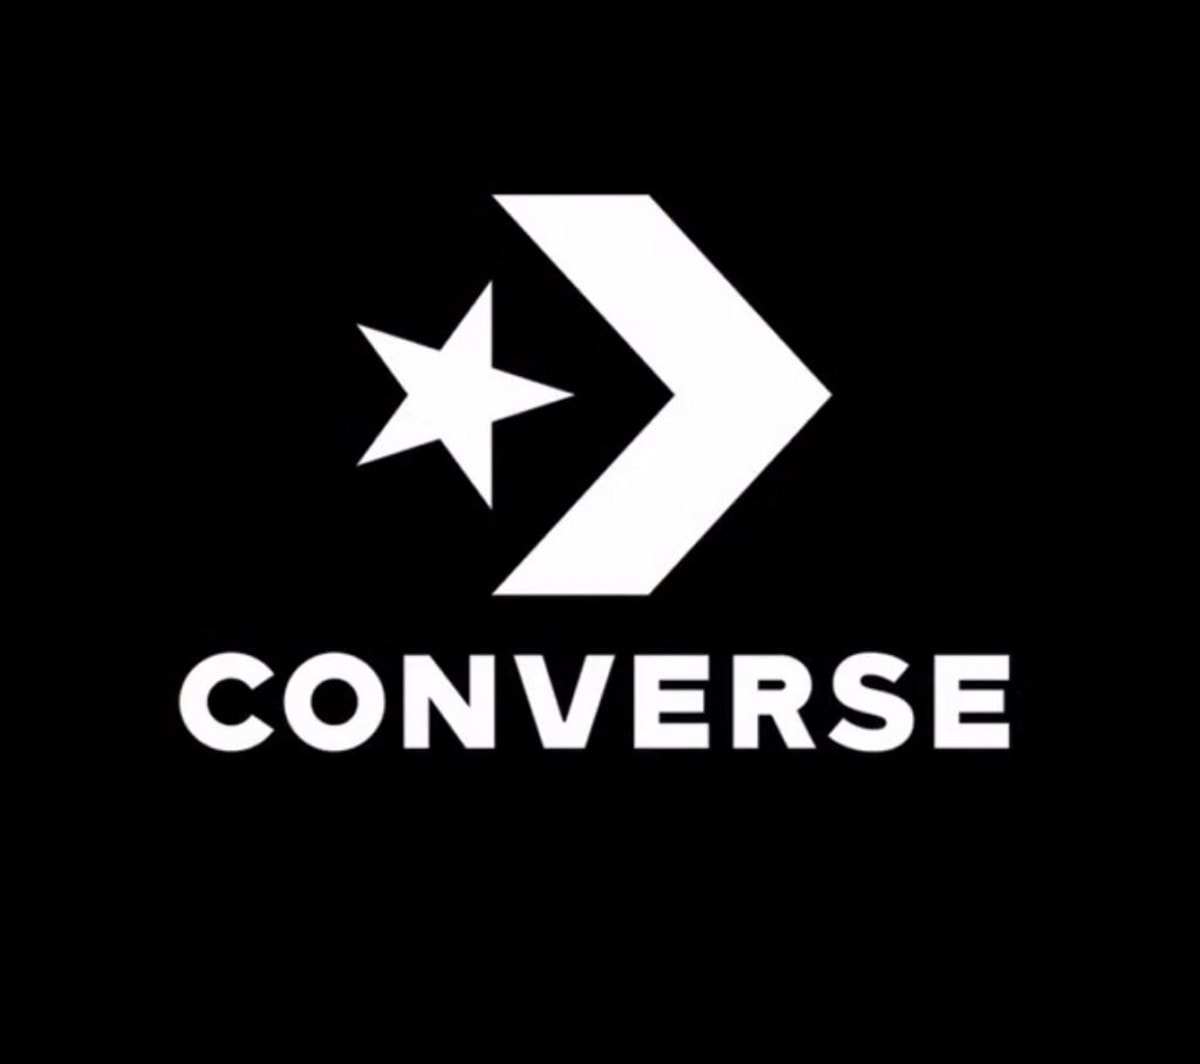 Marketing Strategy Of Converse - Converse Marketing Strategy